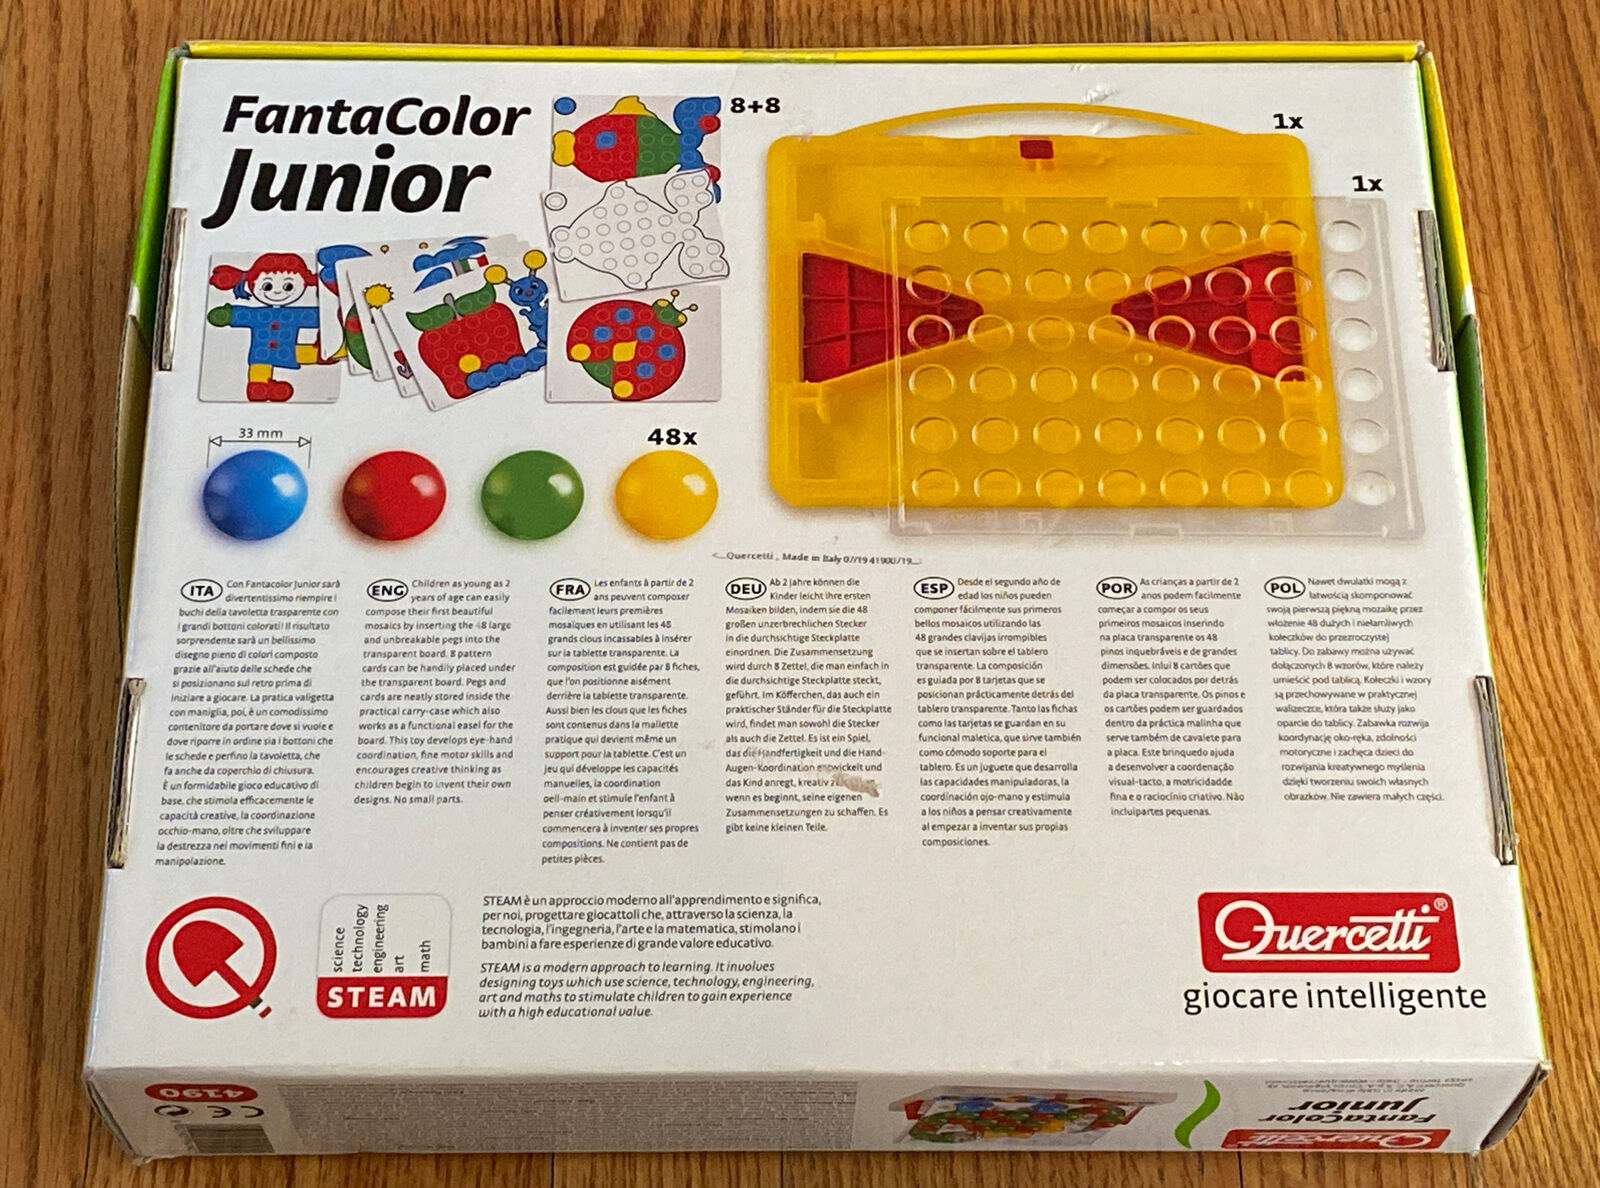 International Playthings Qa4190 Quercetti Fantacolor Junior Pegboard Set for sale online 